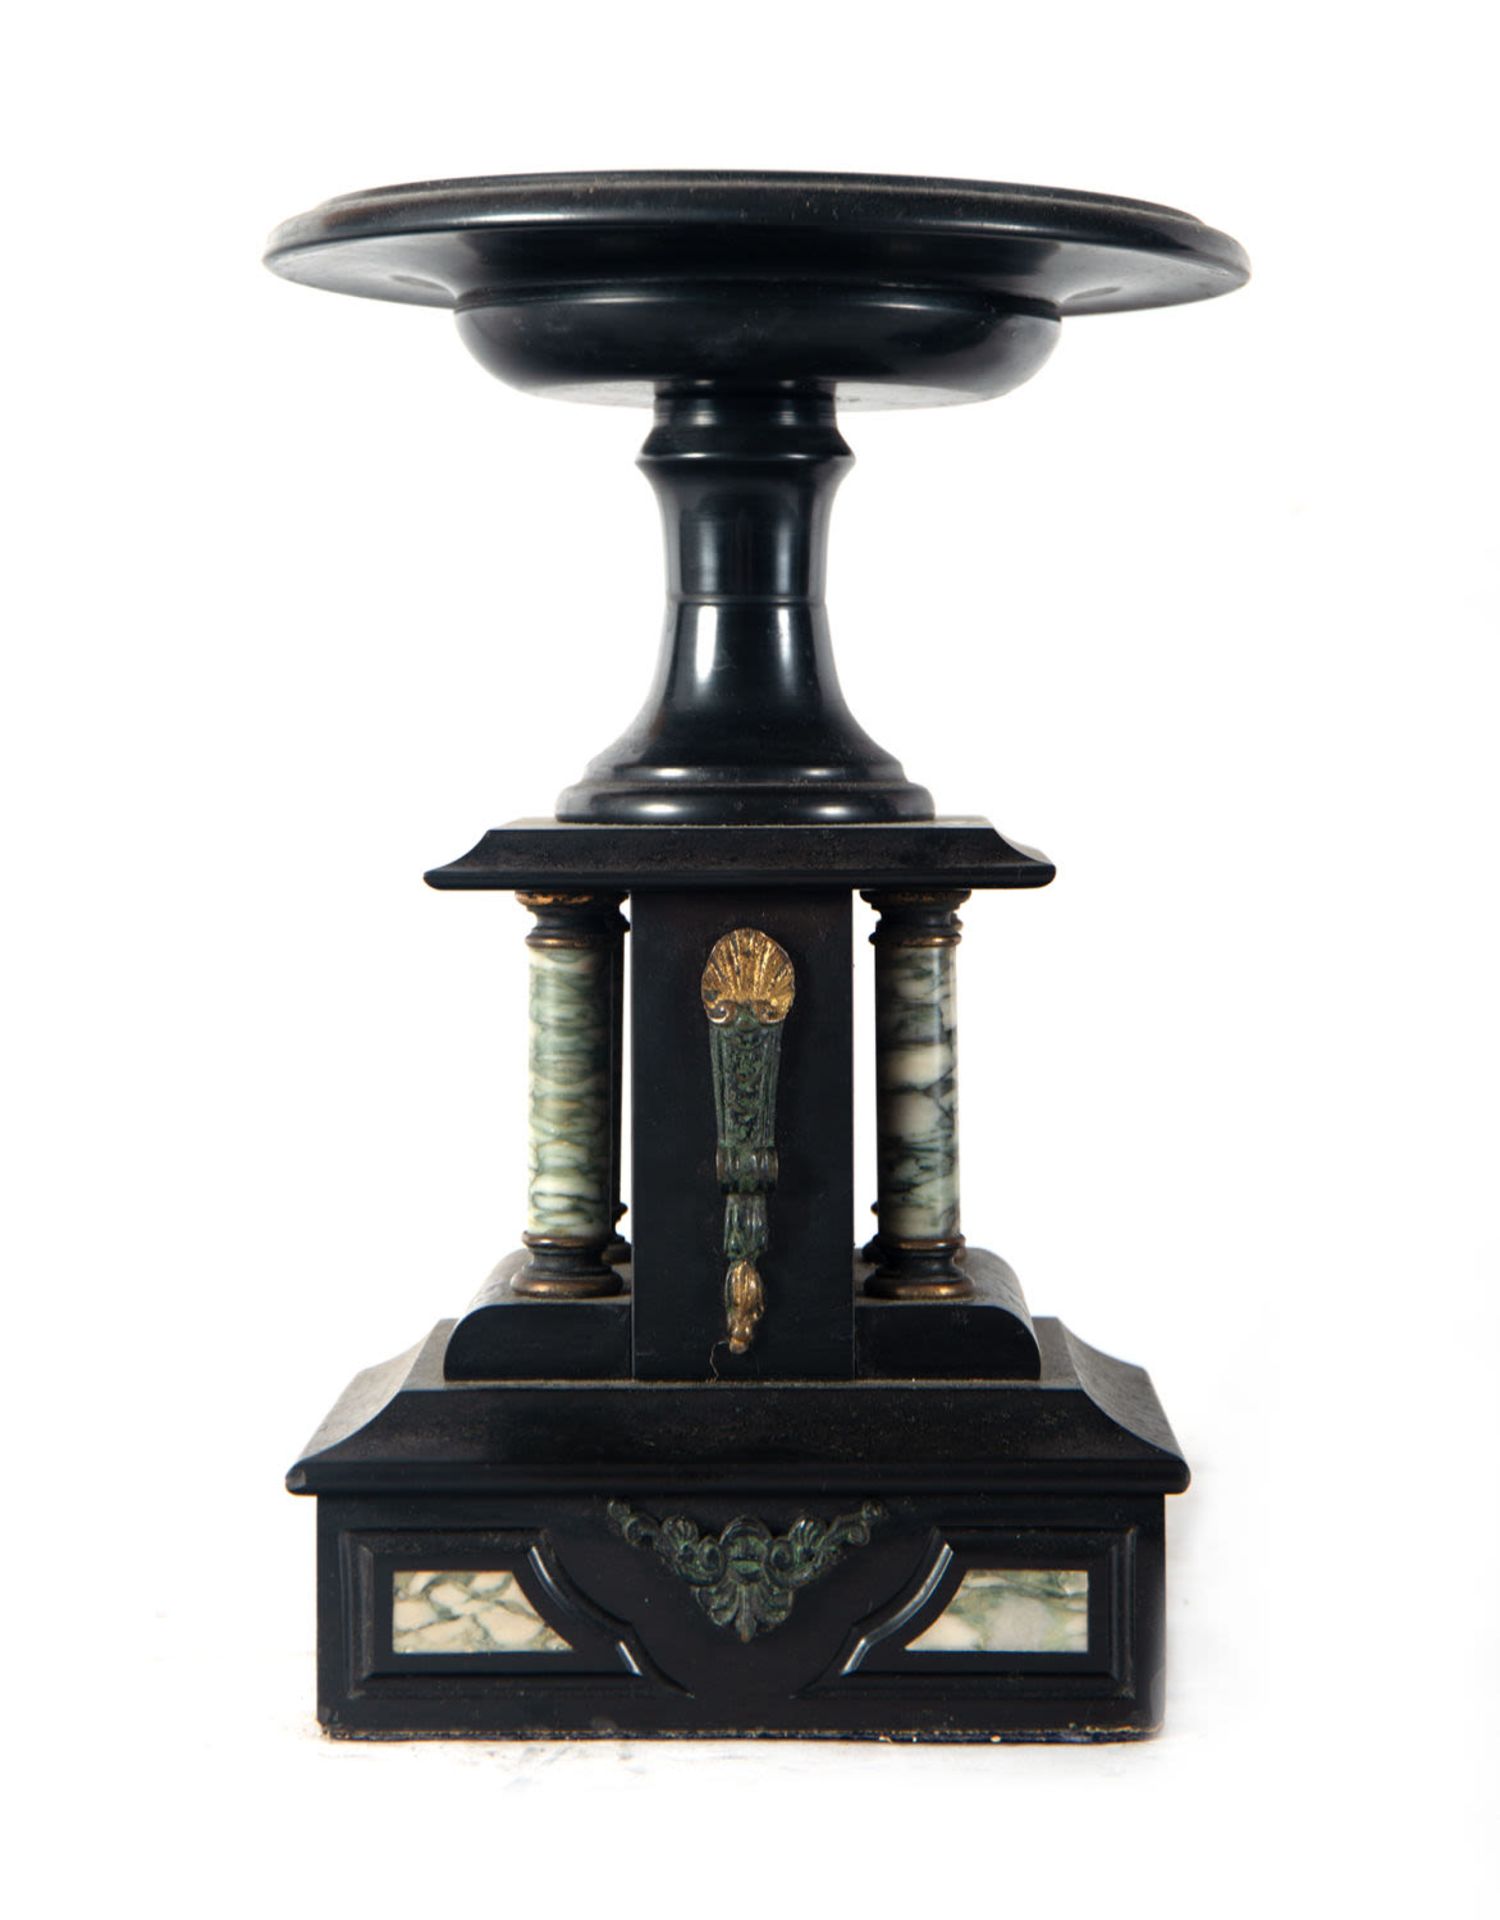 Art Nouveau garniture with mercury pendulum, early 20th century - Image 4 of 7